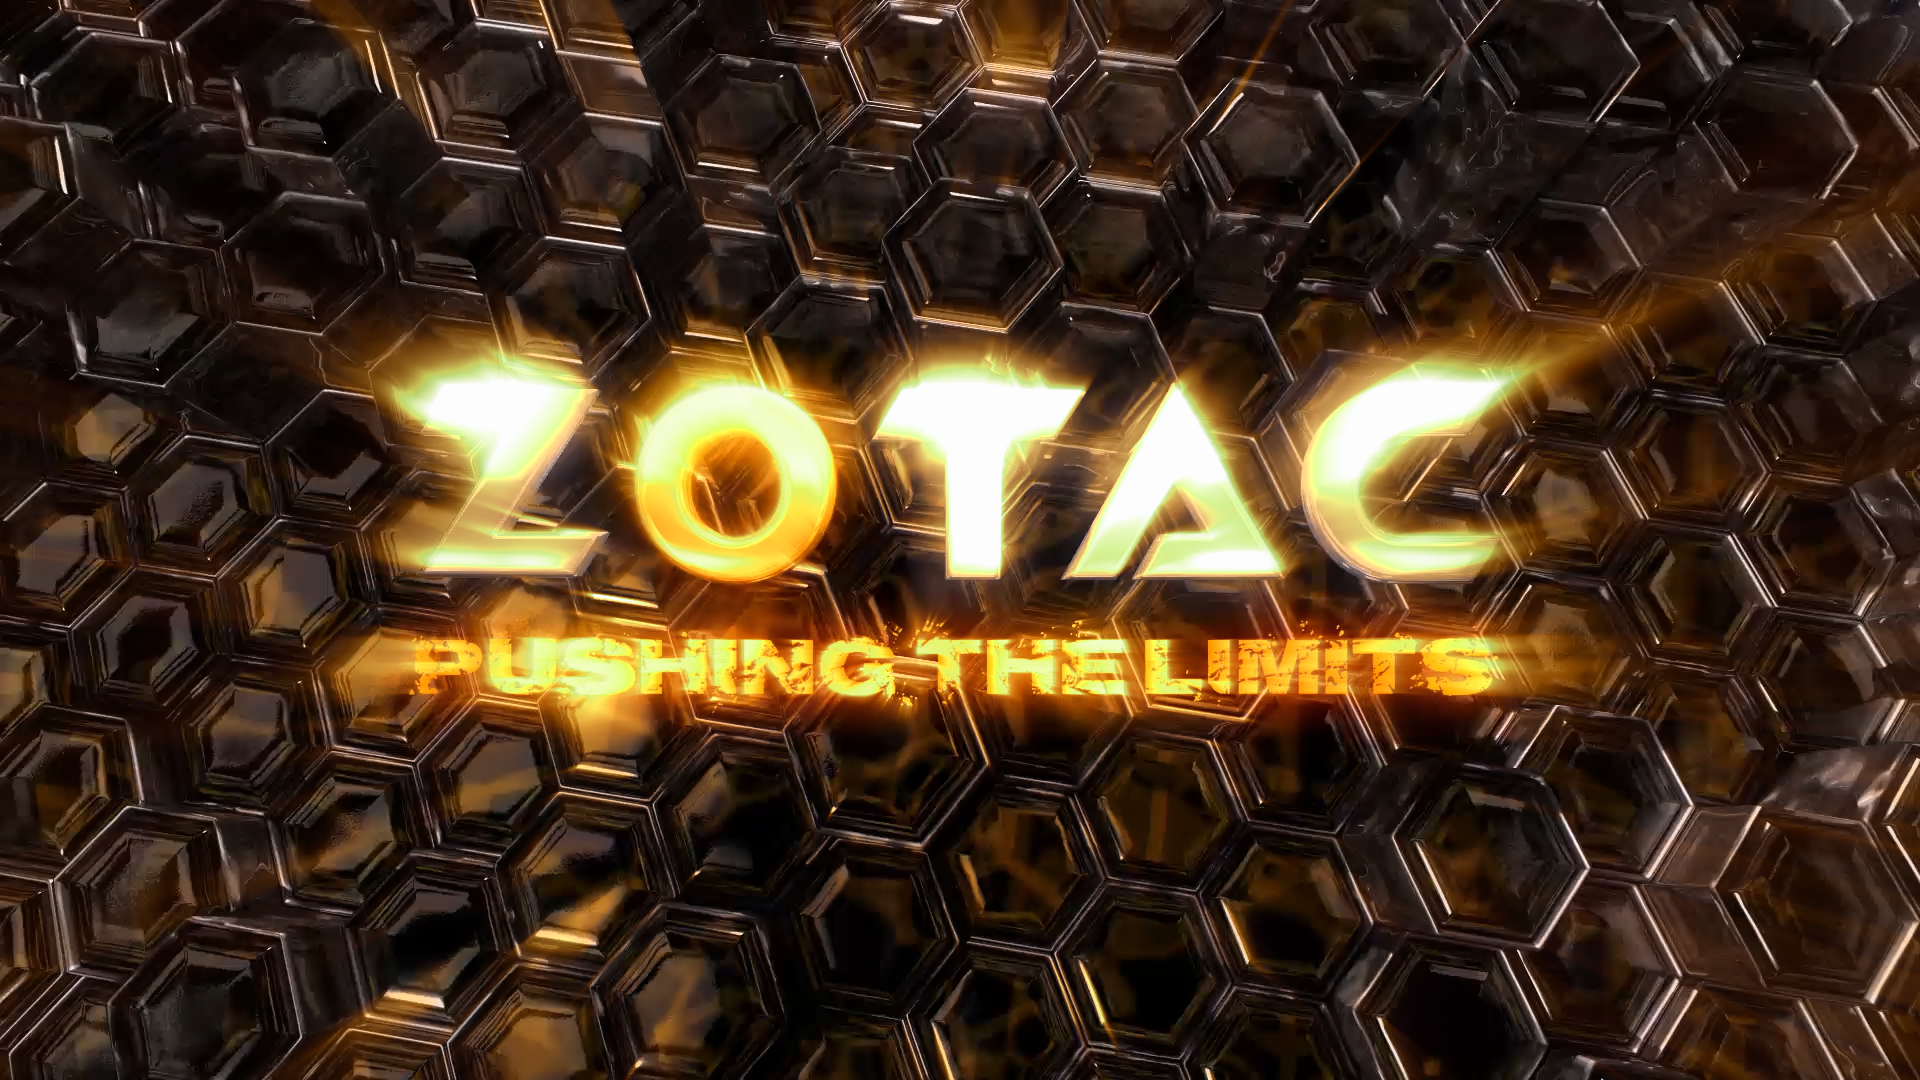 Zotac - Pushing The Limits